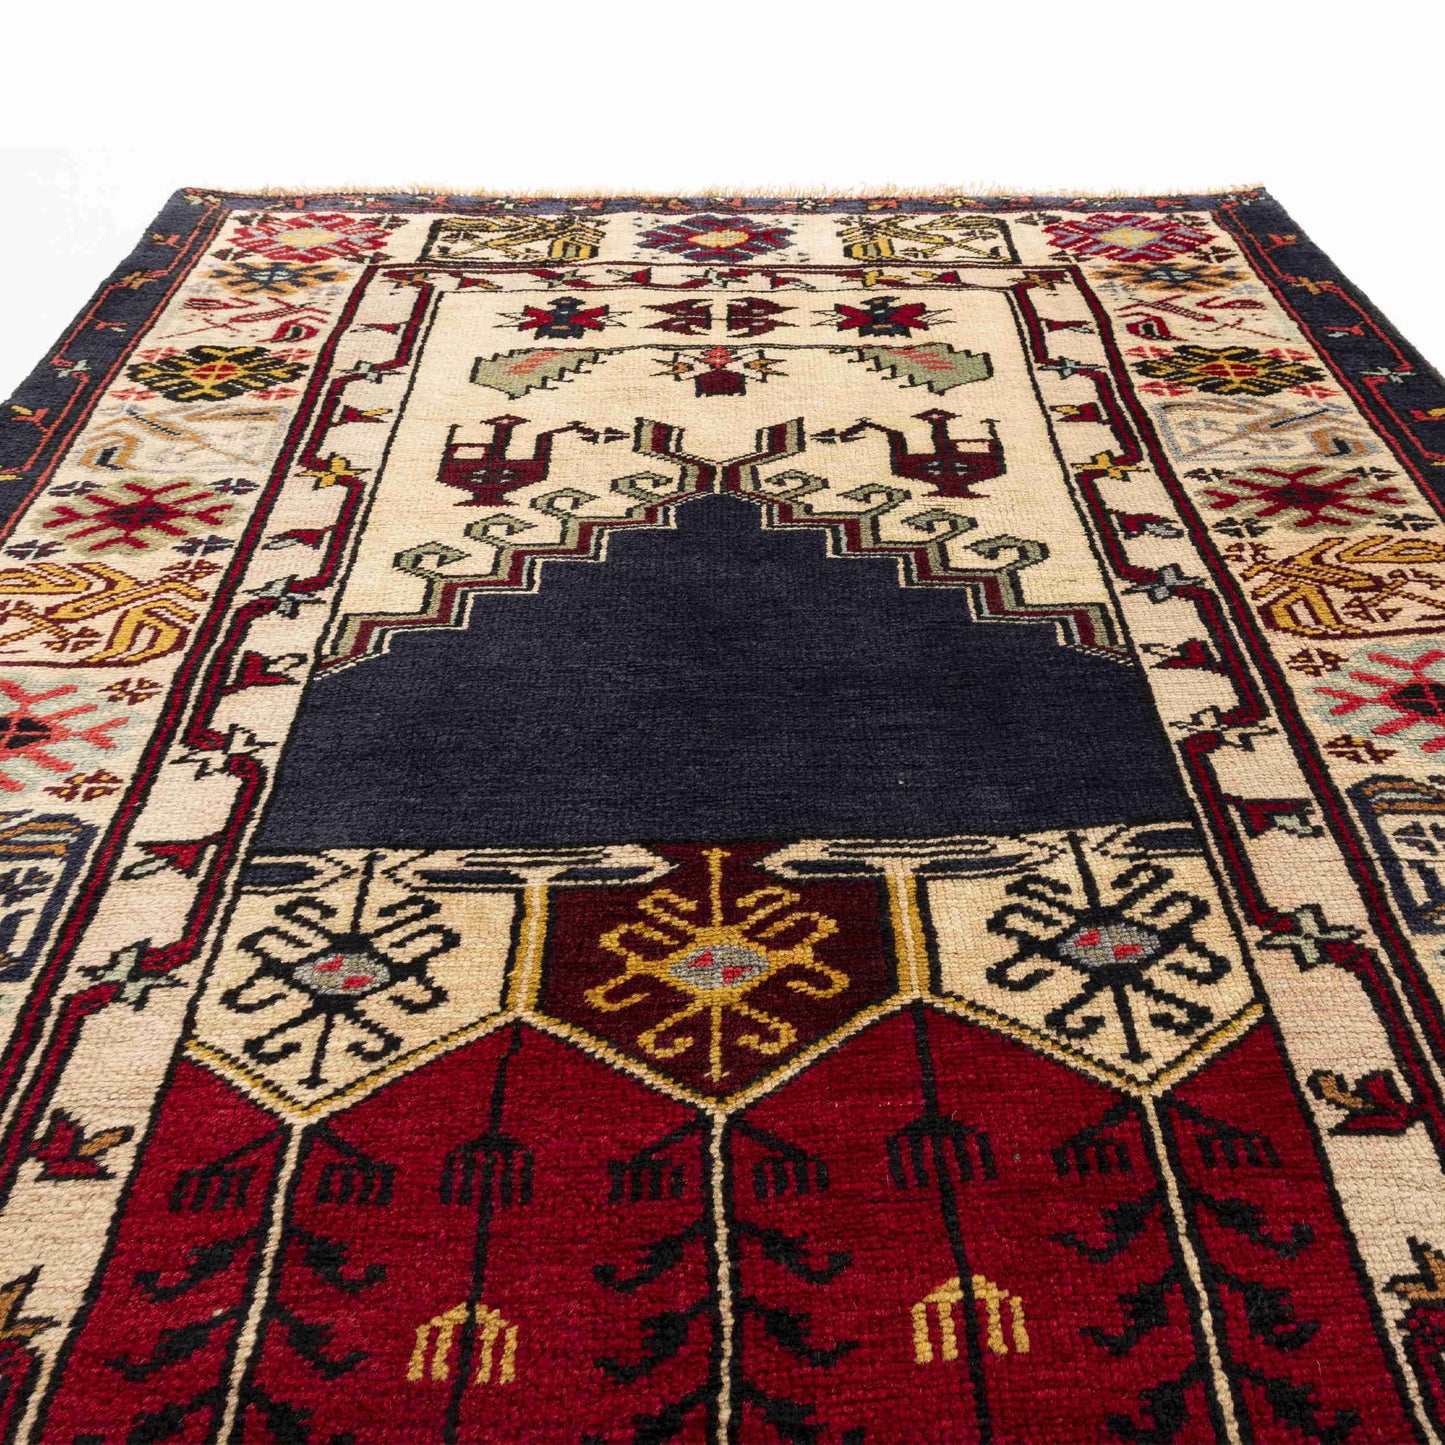 Oriental Rug Anatolian Hand Knotted Wool On Wool 120 X 178 Cm - 4' X 5' 11'' ER01